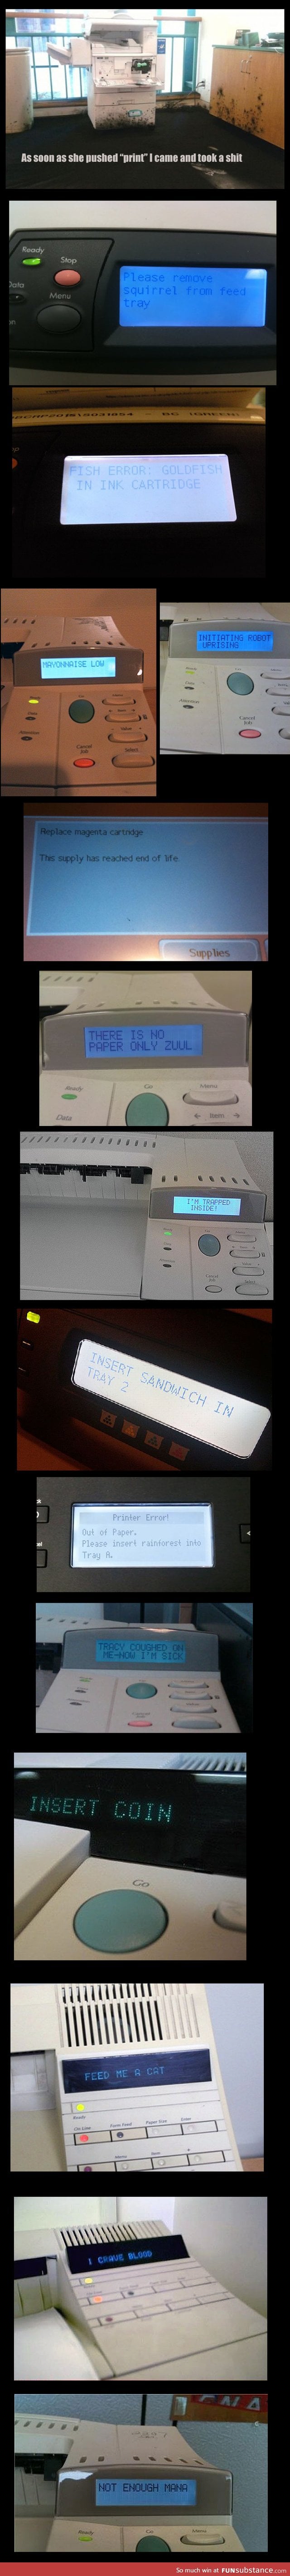 Evil printers